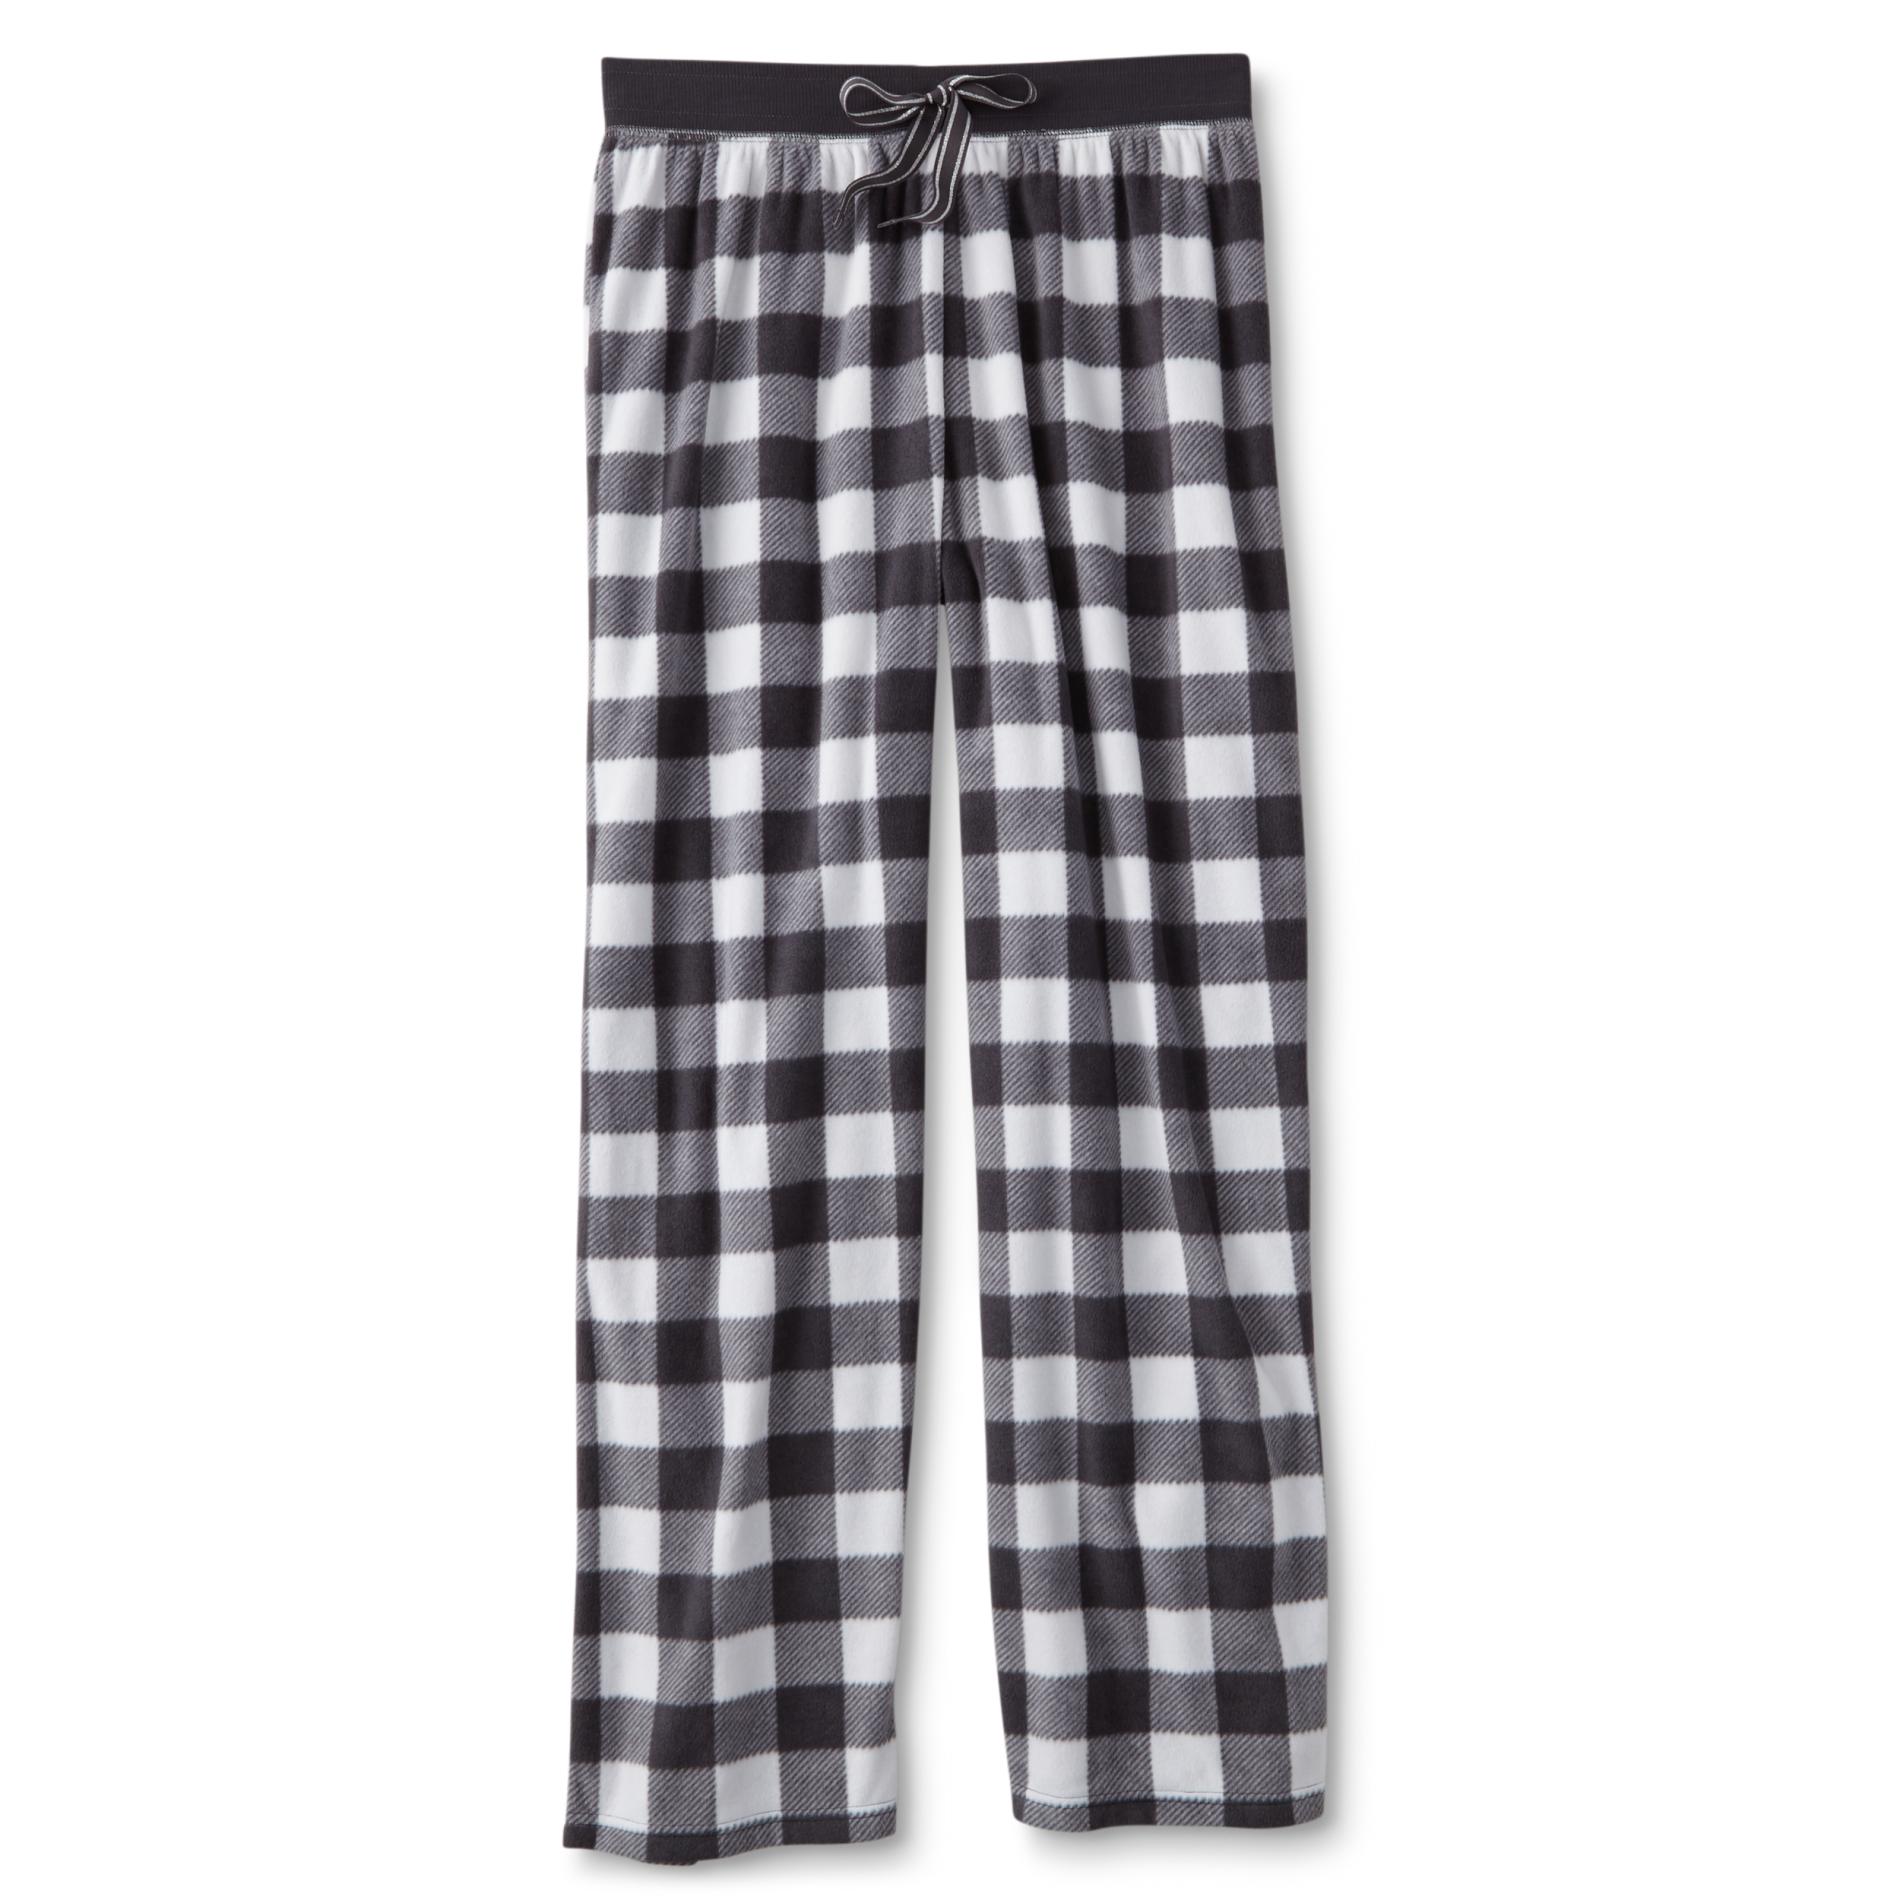 Covington Women's Fleece Pajama Pants - Buffalo Check Plaid